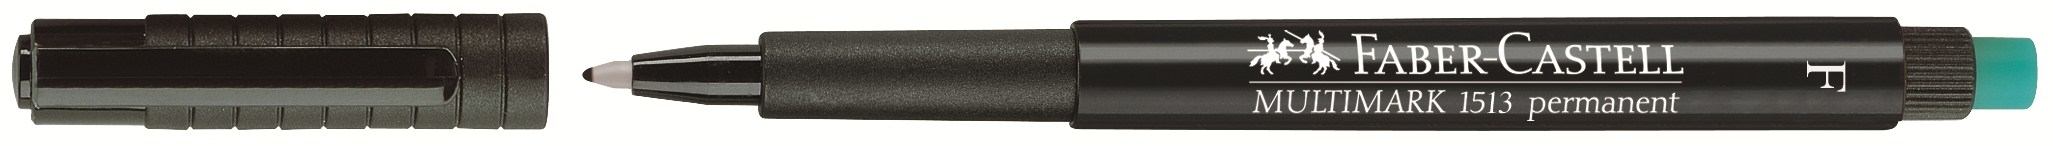 FABER-CASTELL OHP MULTIMARK F 151399 noir perm.